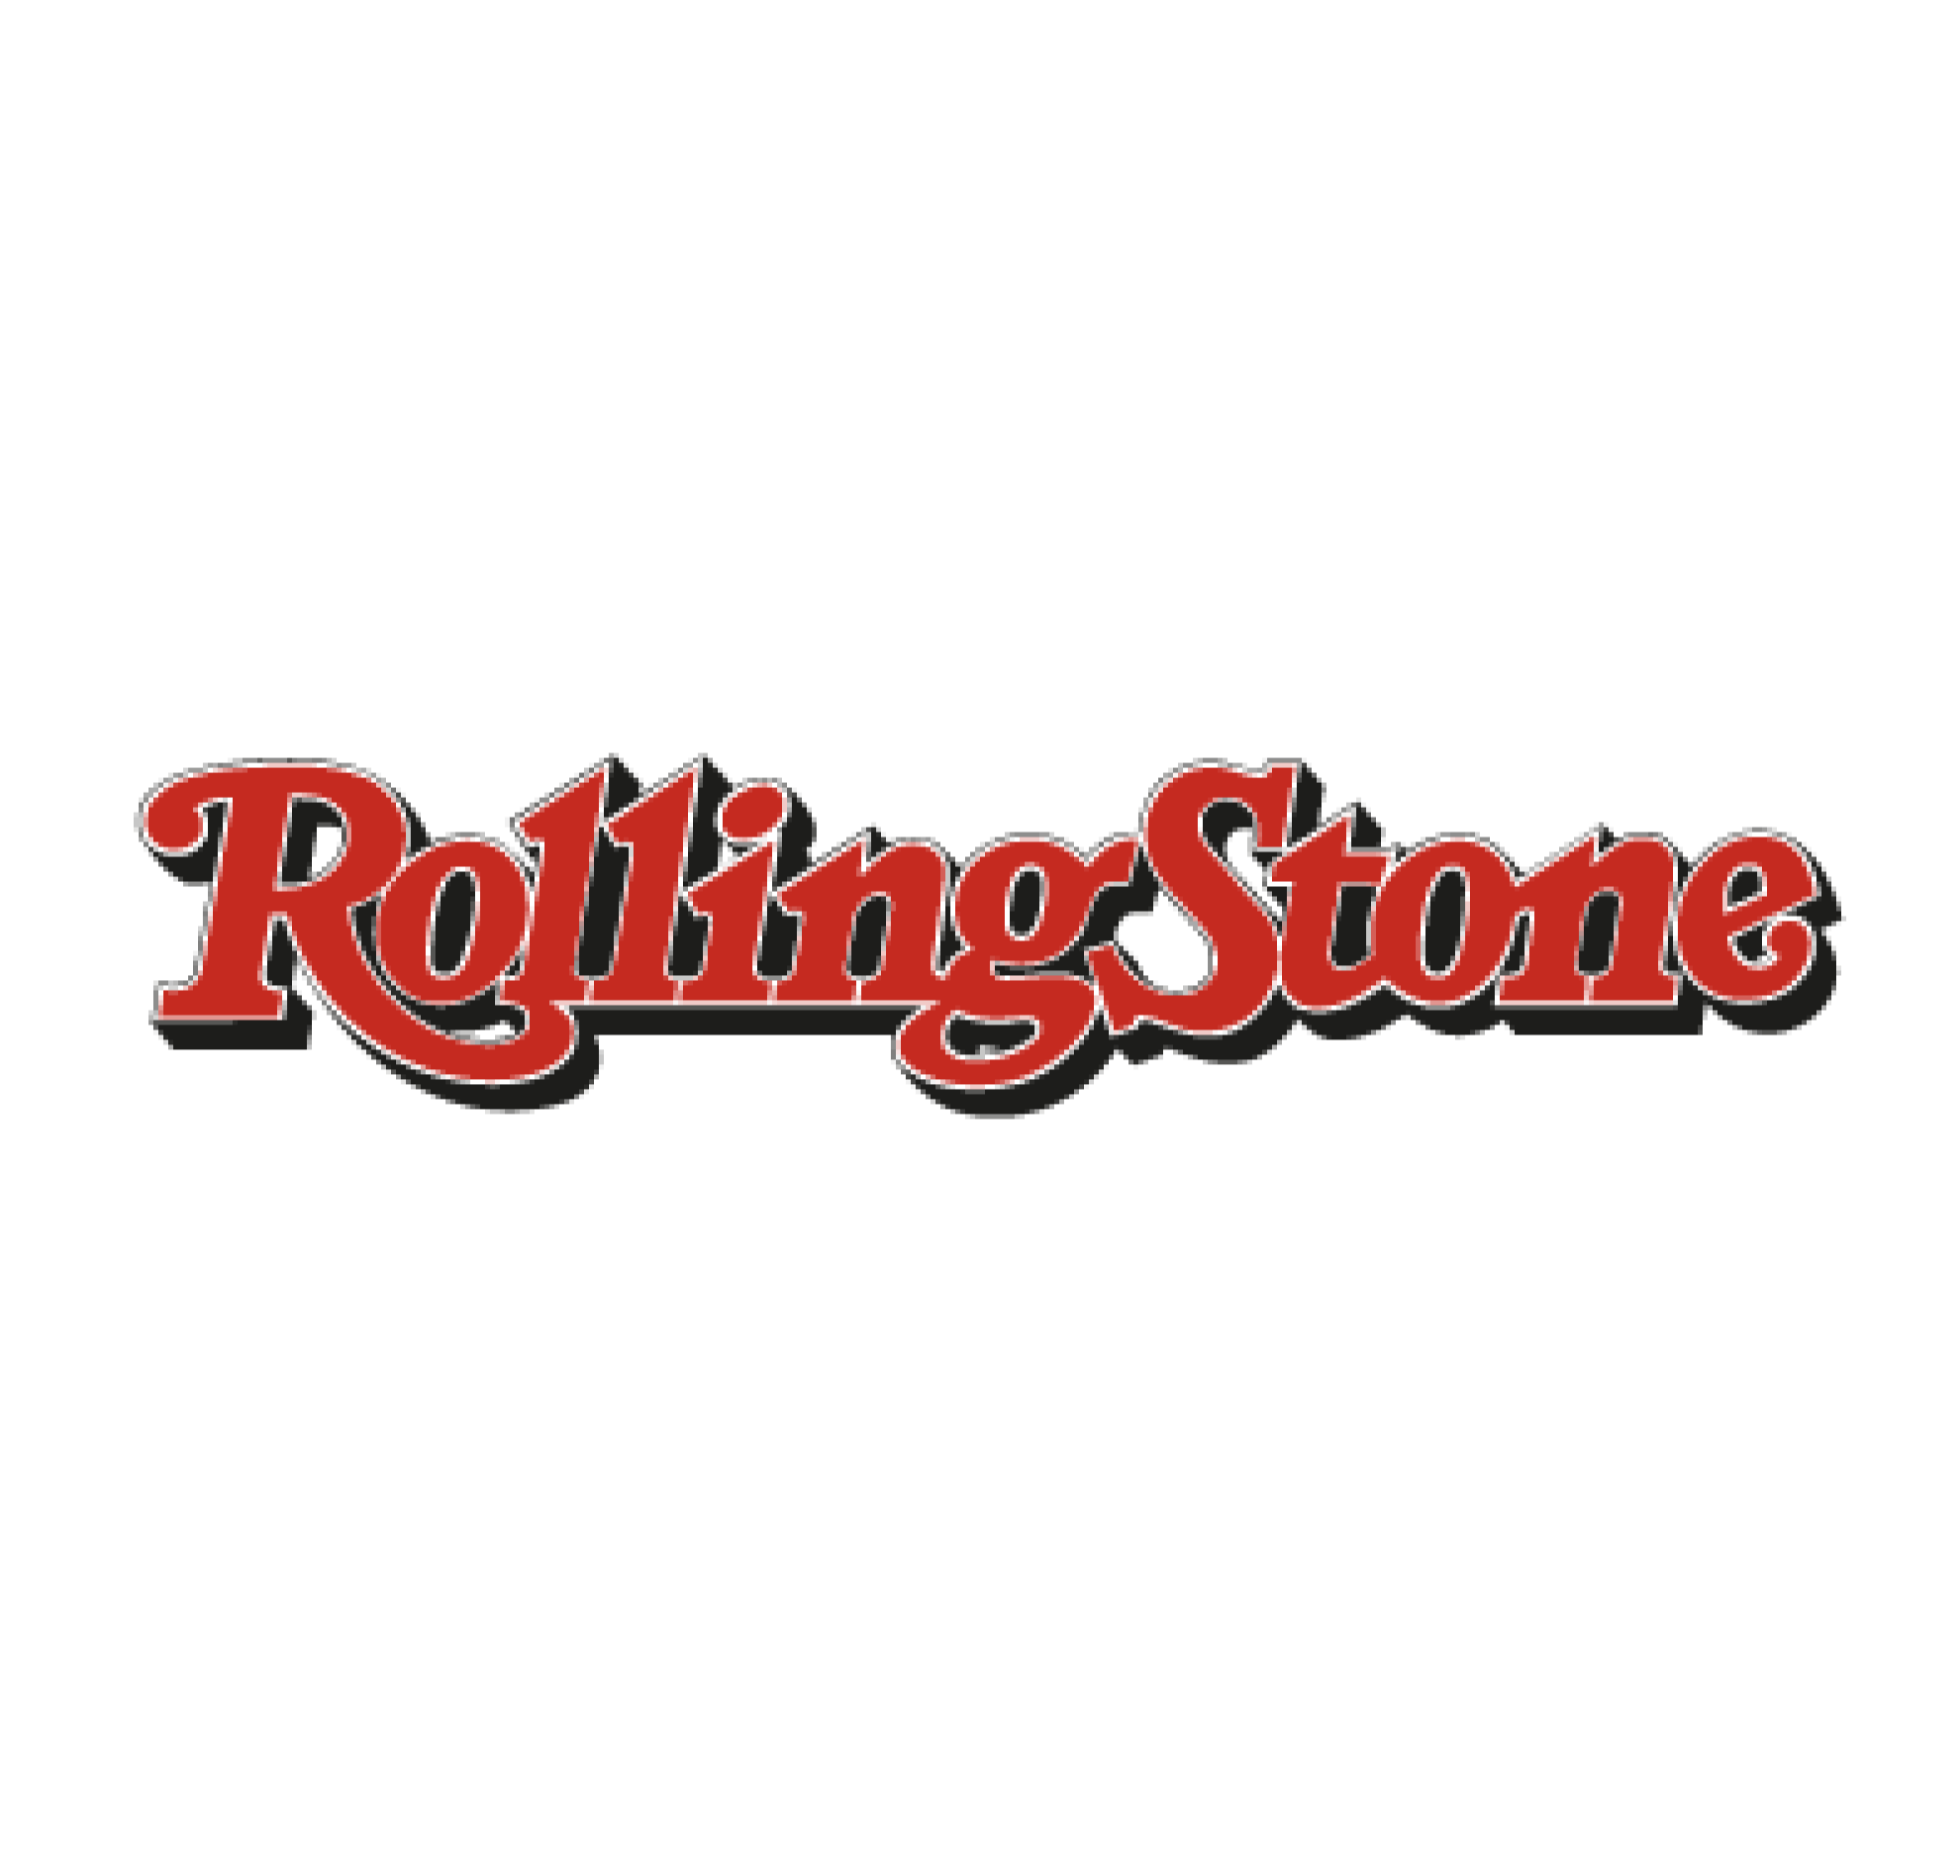 IAPW In the Press | Rolling Stone